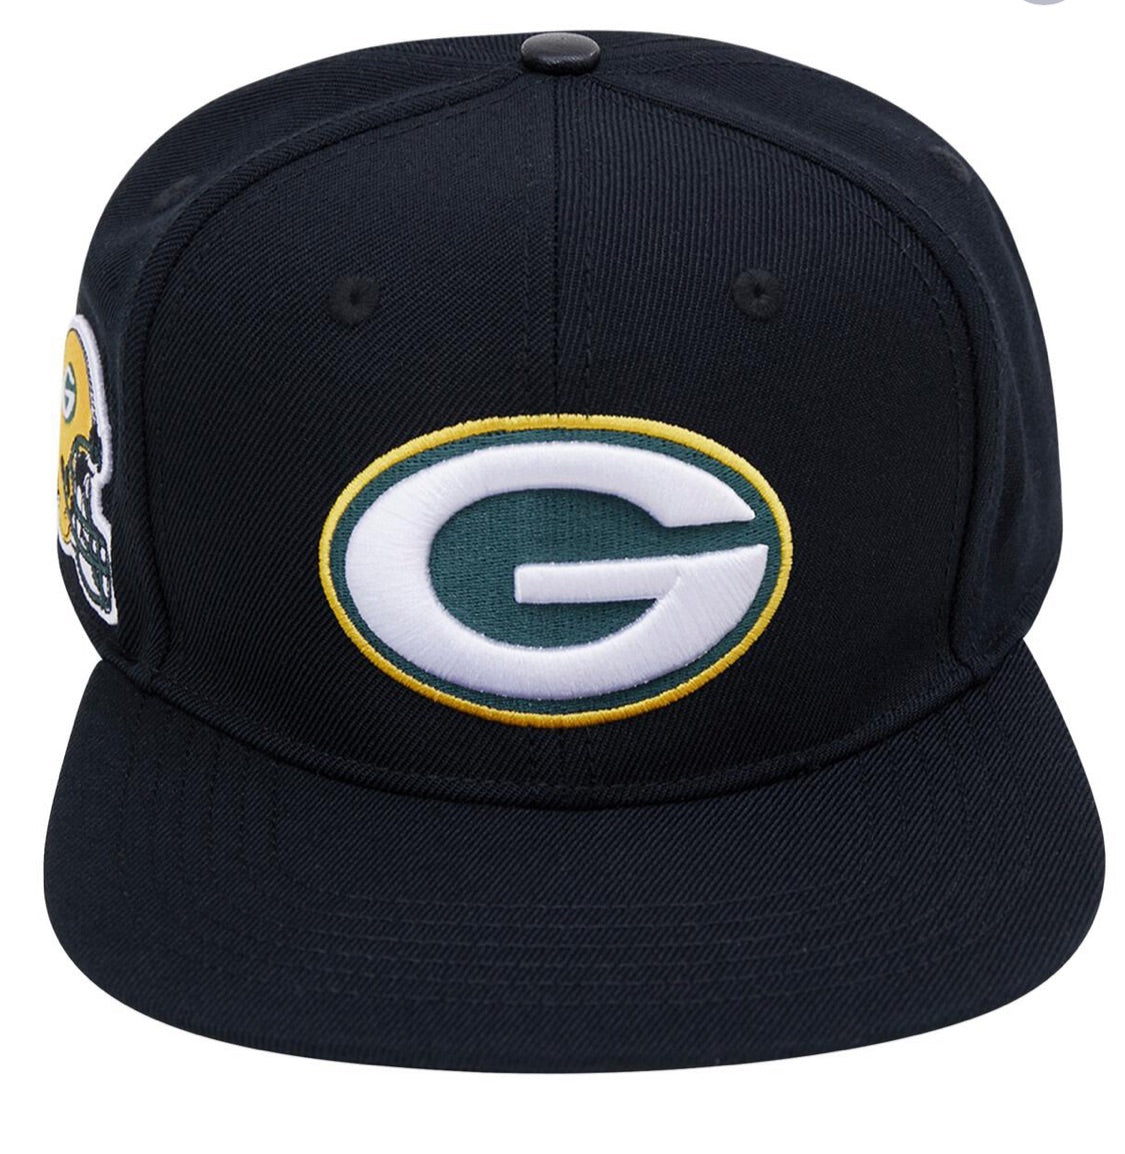 Pro Standard Green Bay Packers Hat